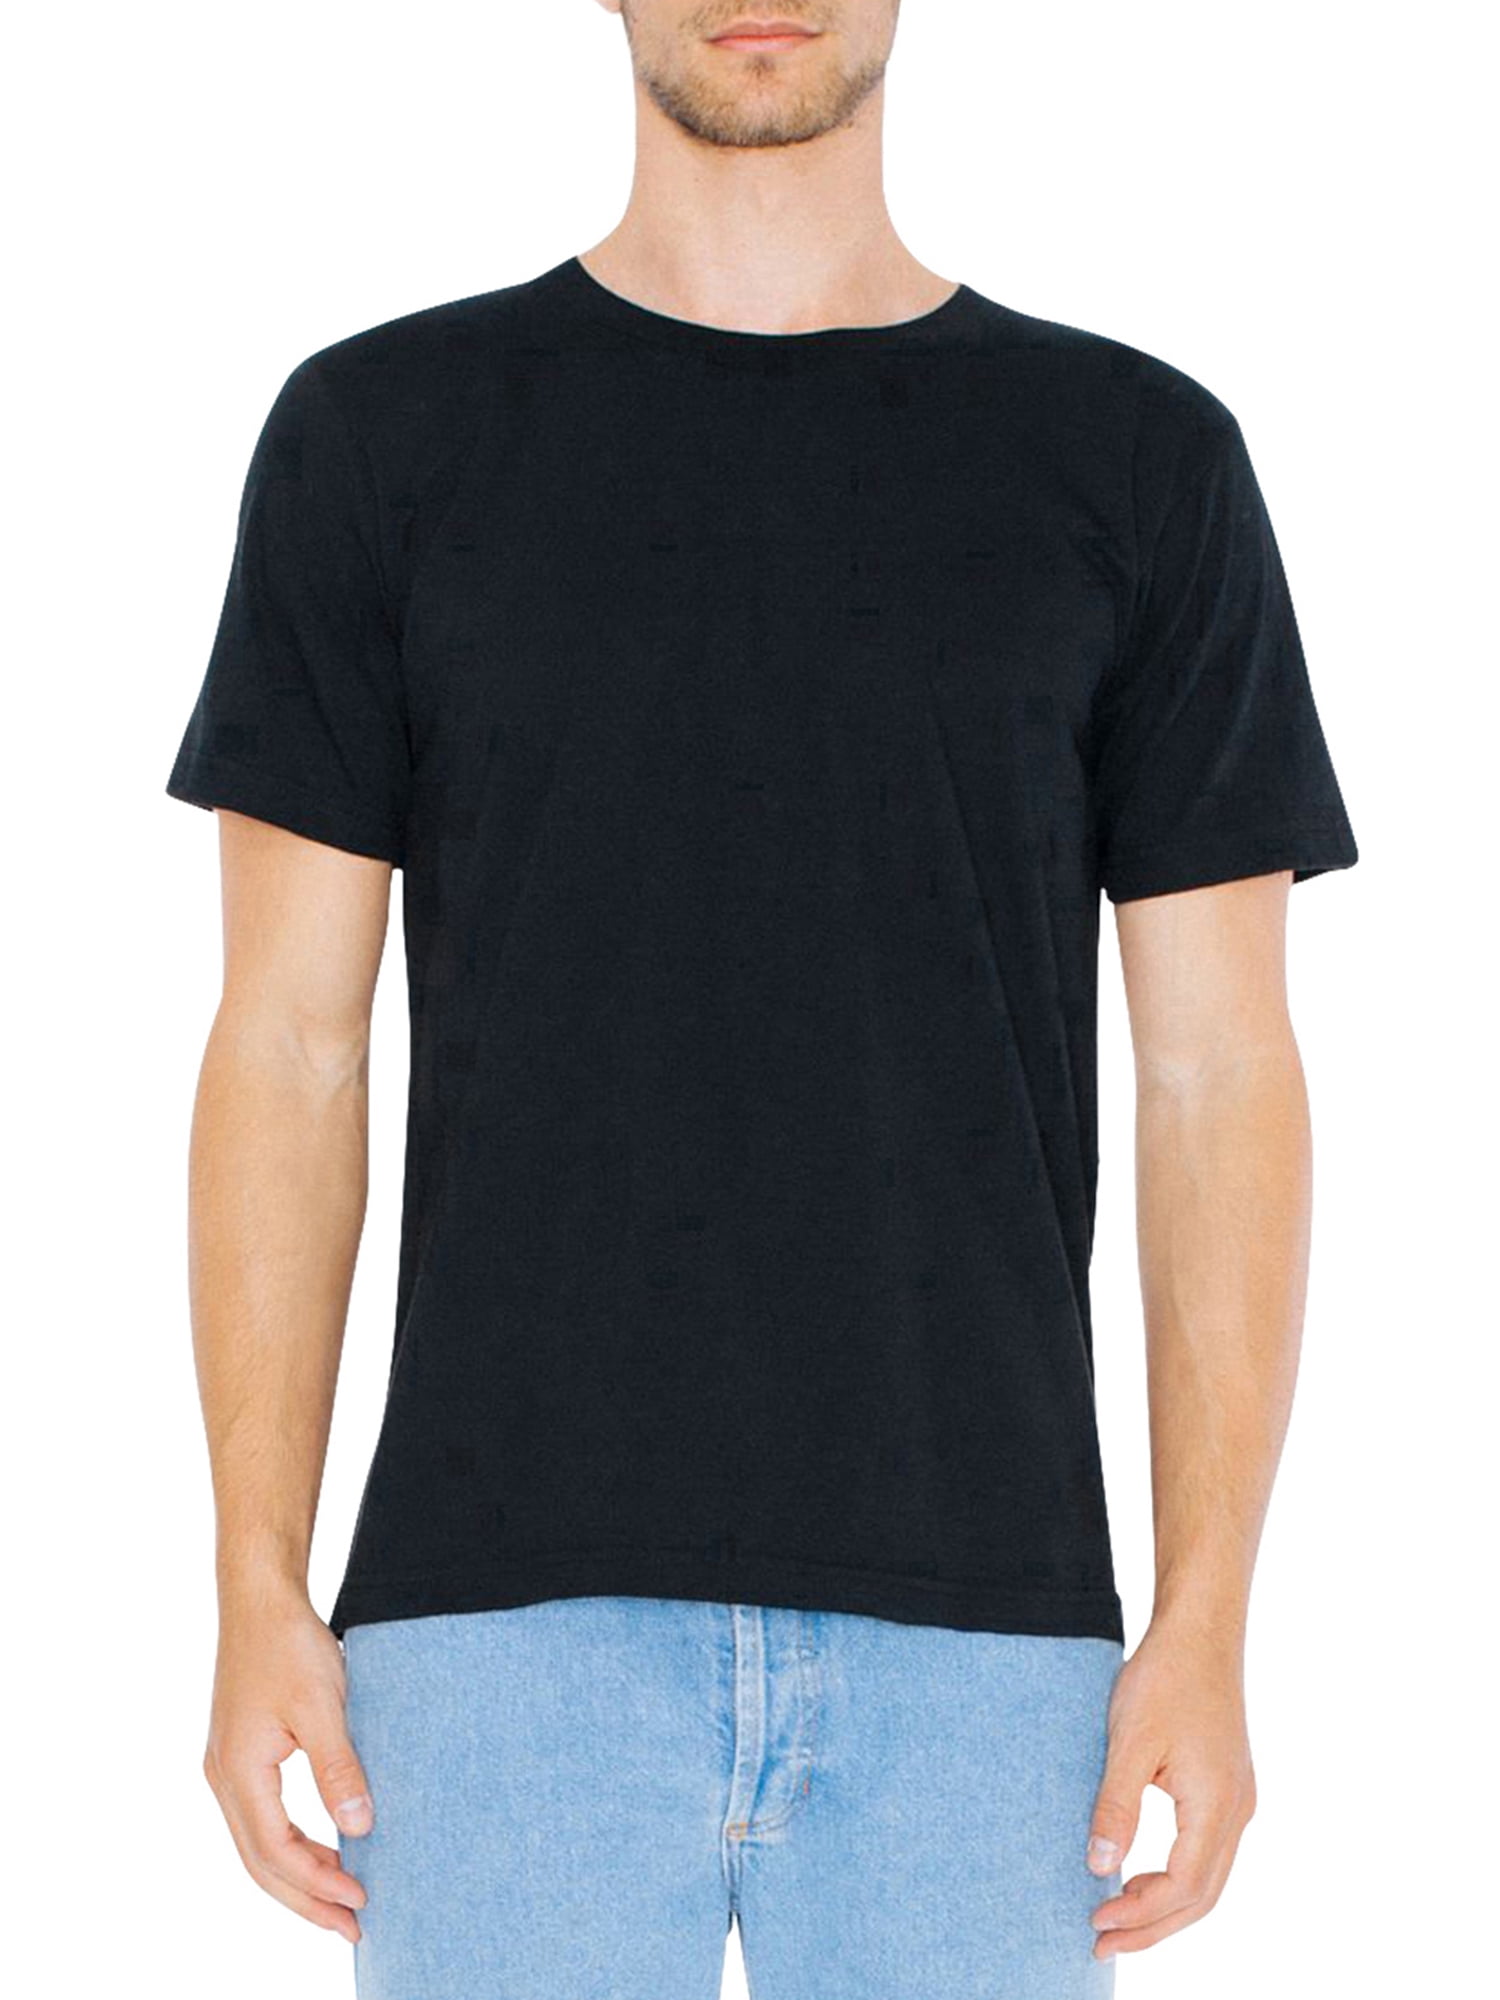 American Apparel Mens Fine Jersey Crewneck Short Sleeve T-Shirt 2-Pack